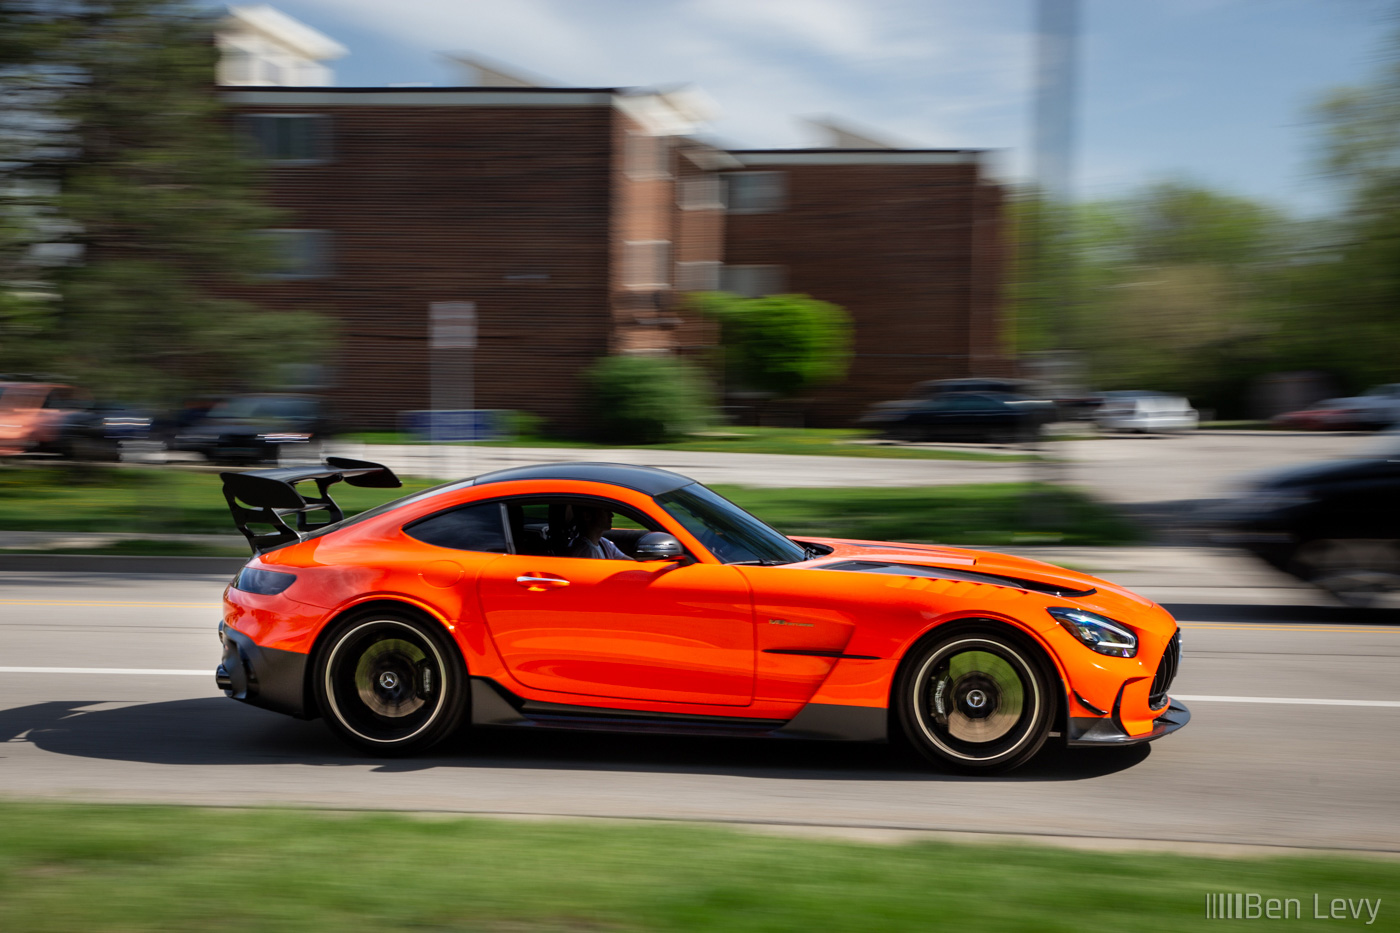 Rolling Shot of Orange AMG GT Black Series